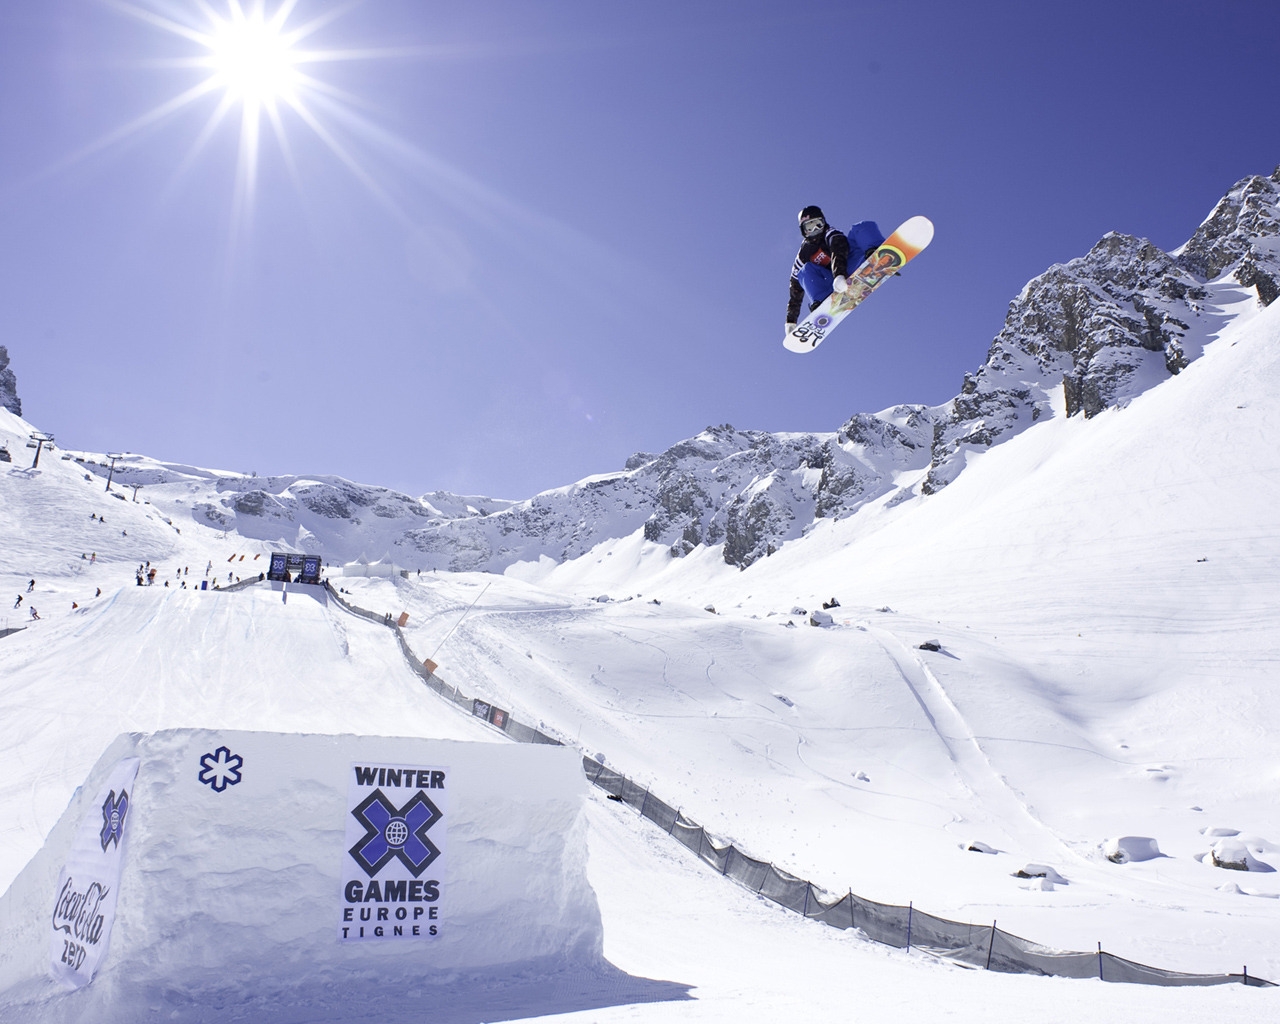 Snowboarding Season for 1280 x 1024 resolution